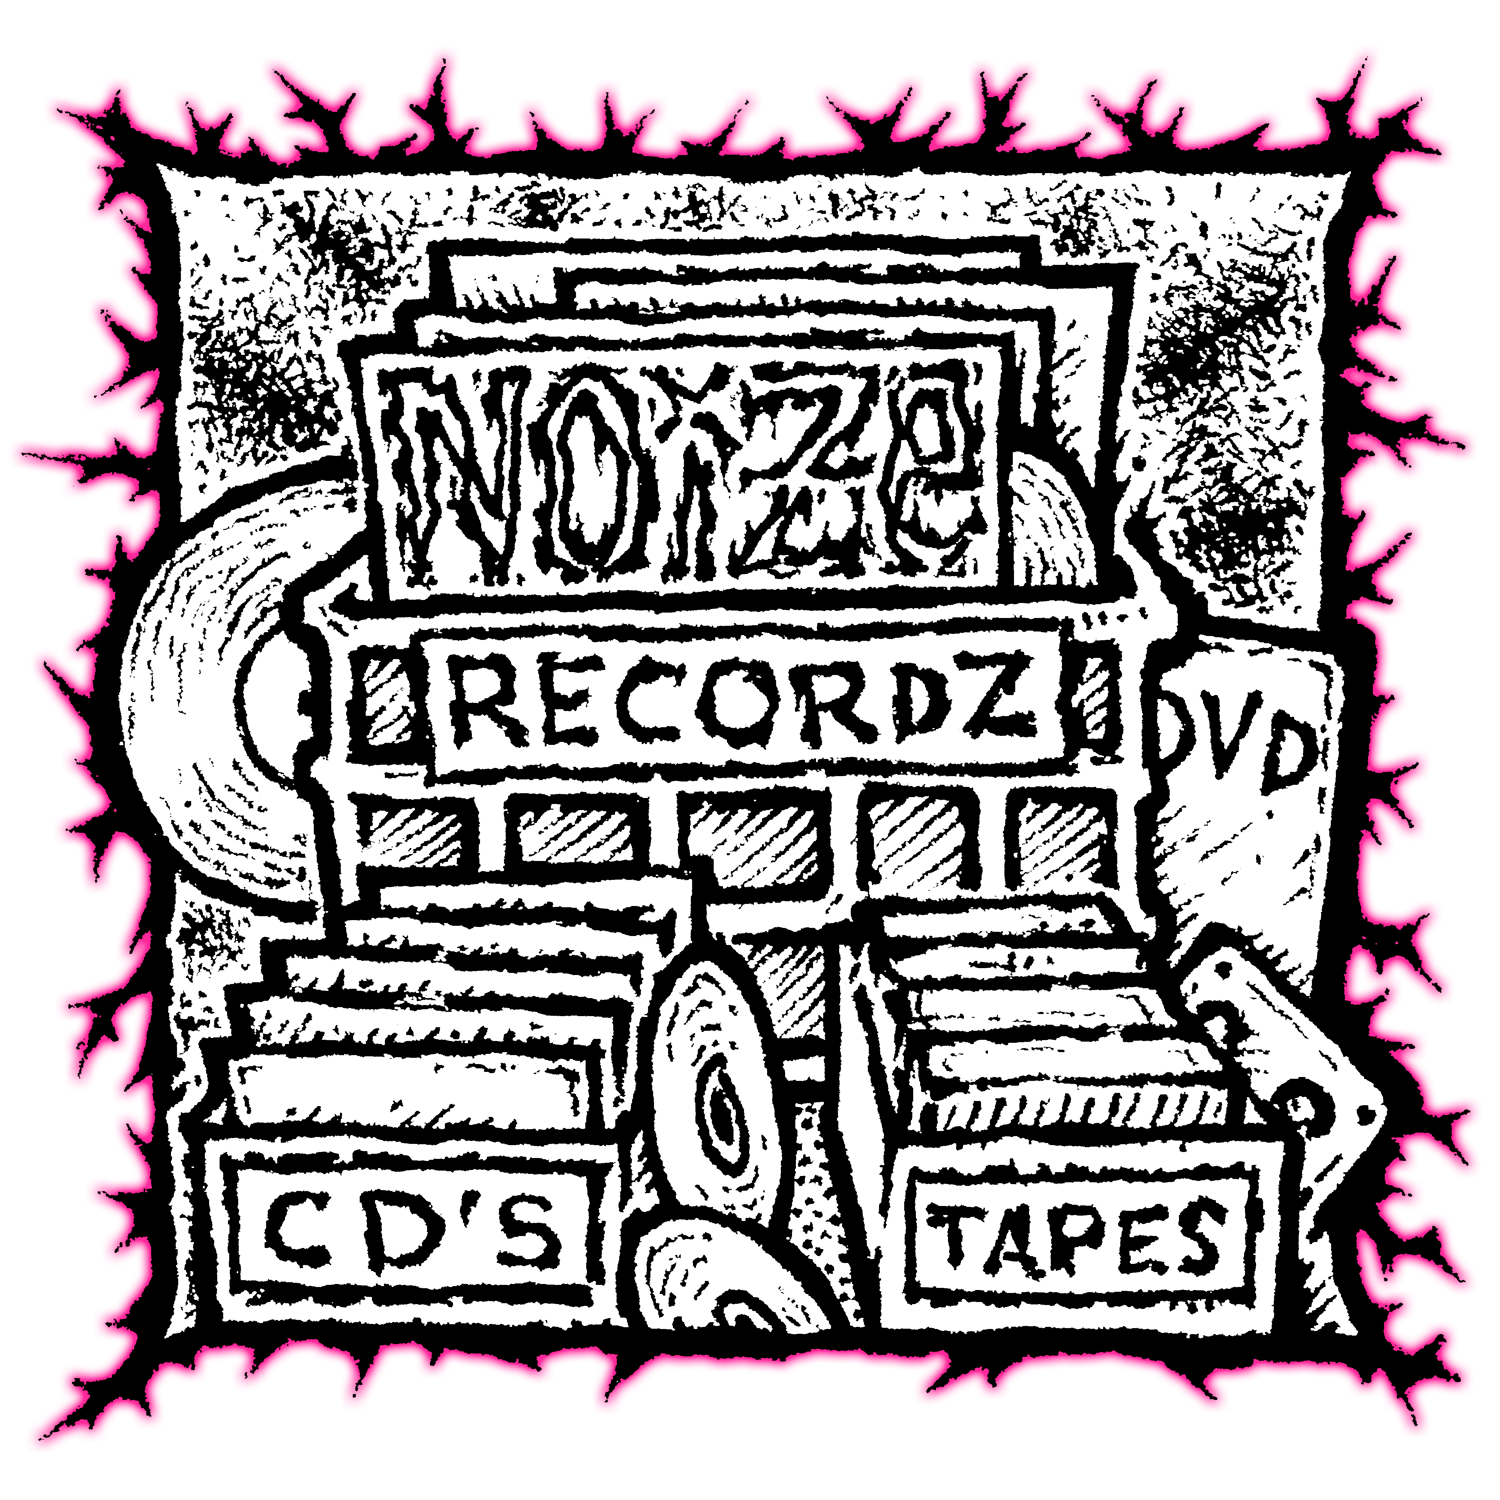 NOIZE (vinyl, CD, tapes, etc.)